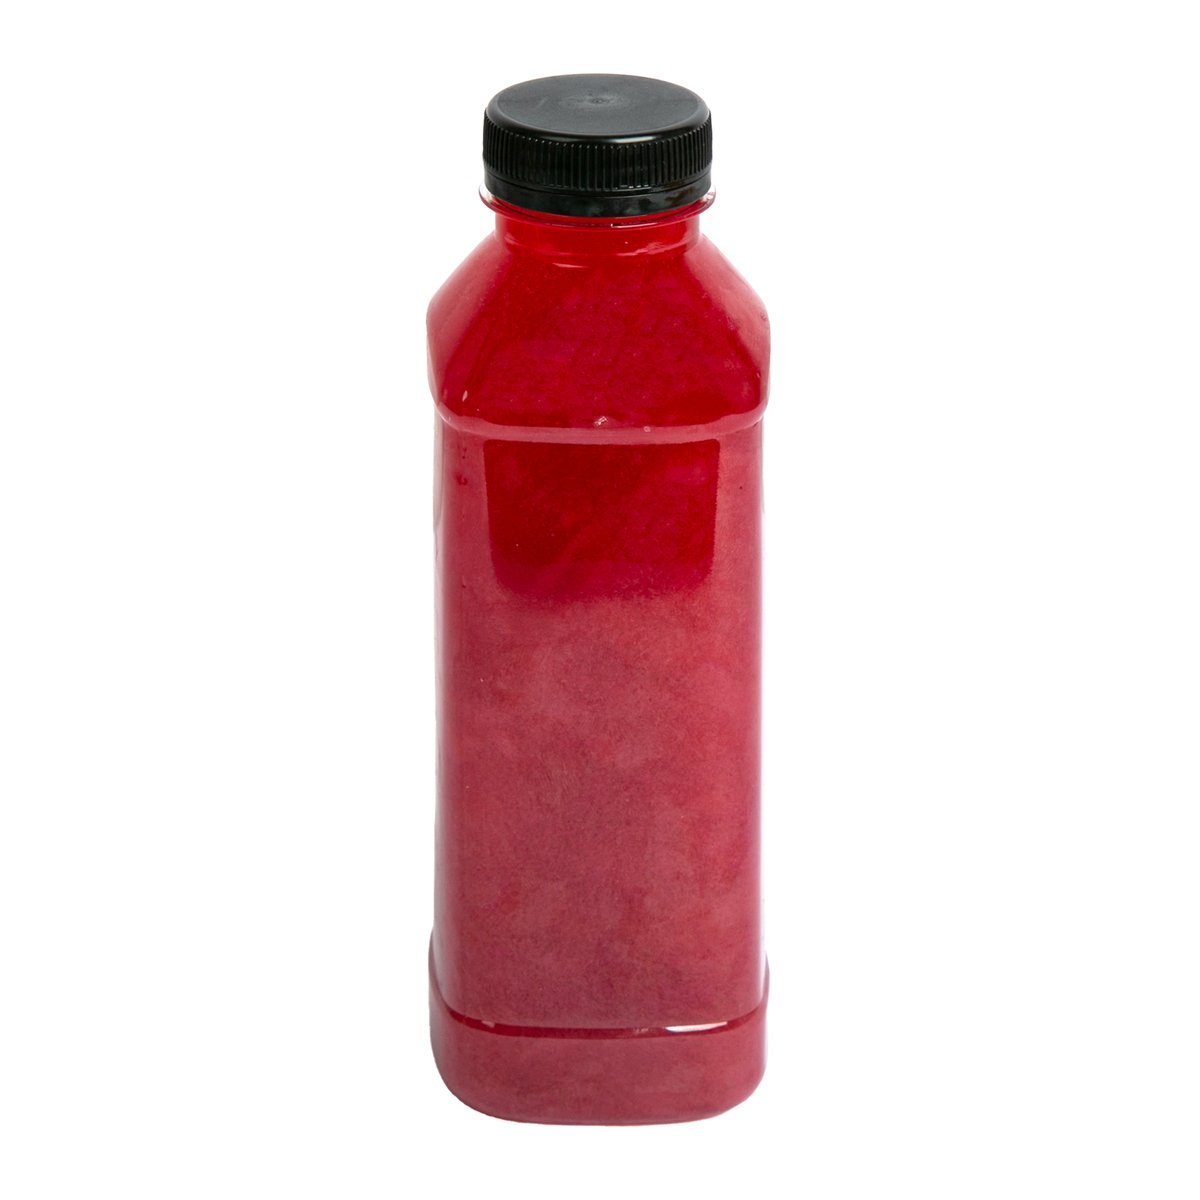 LuLu Fresh Jallab Juice 500 ml